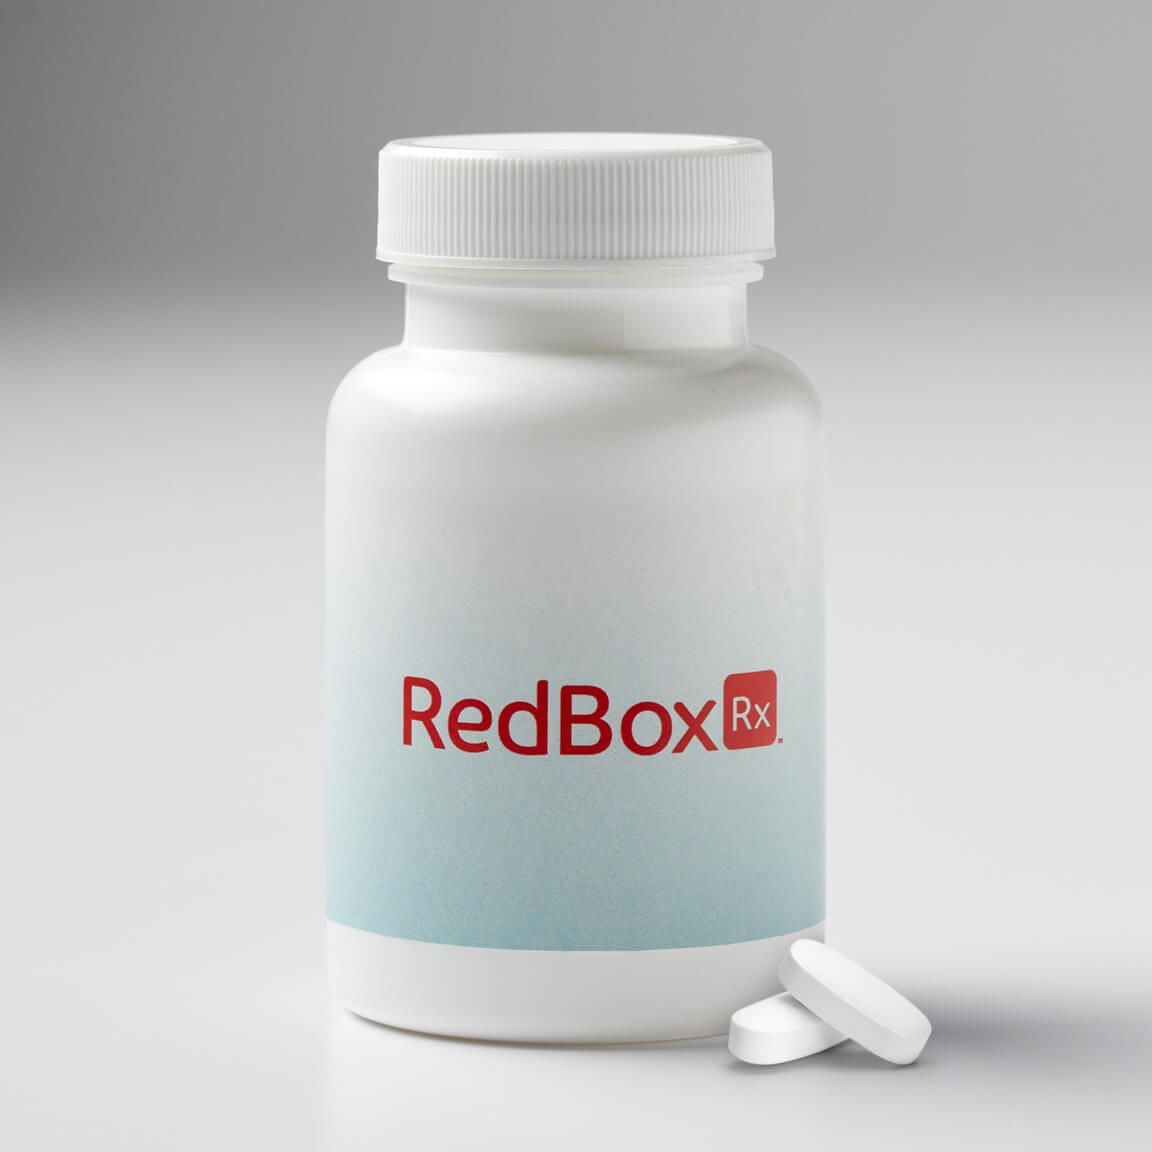 RedBox Rx Heartburn Medication Bottle